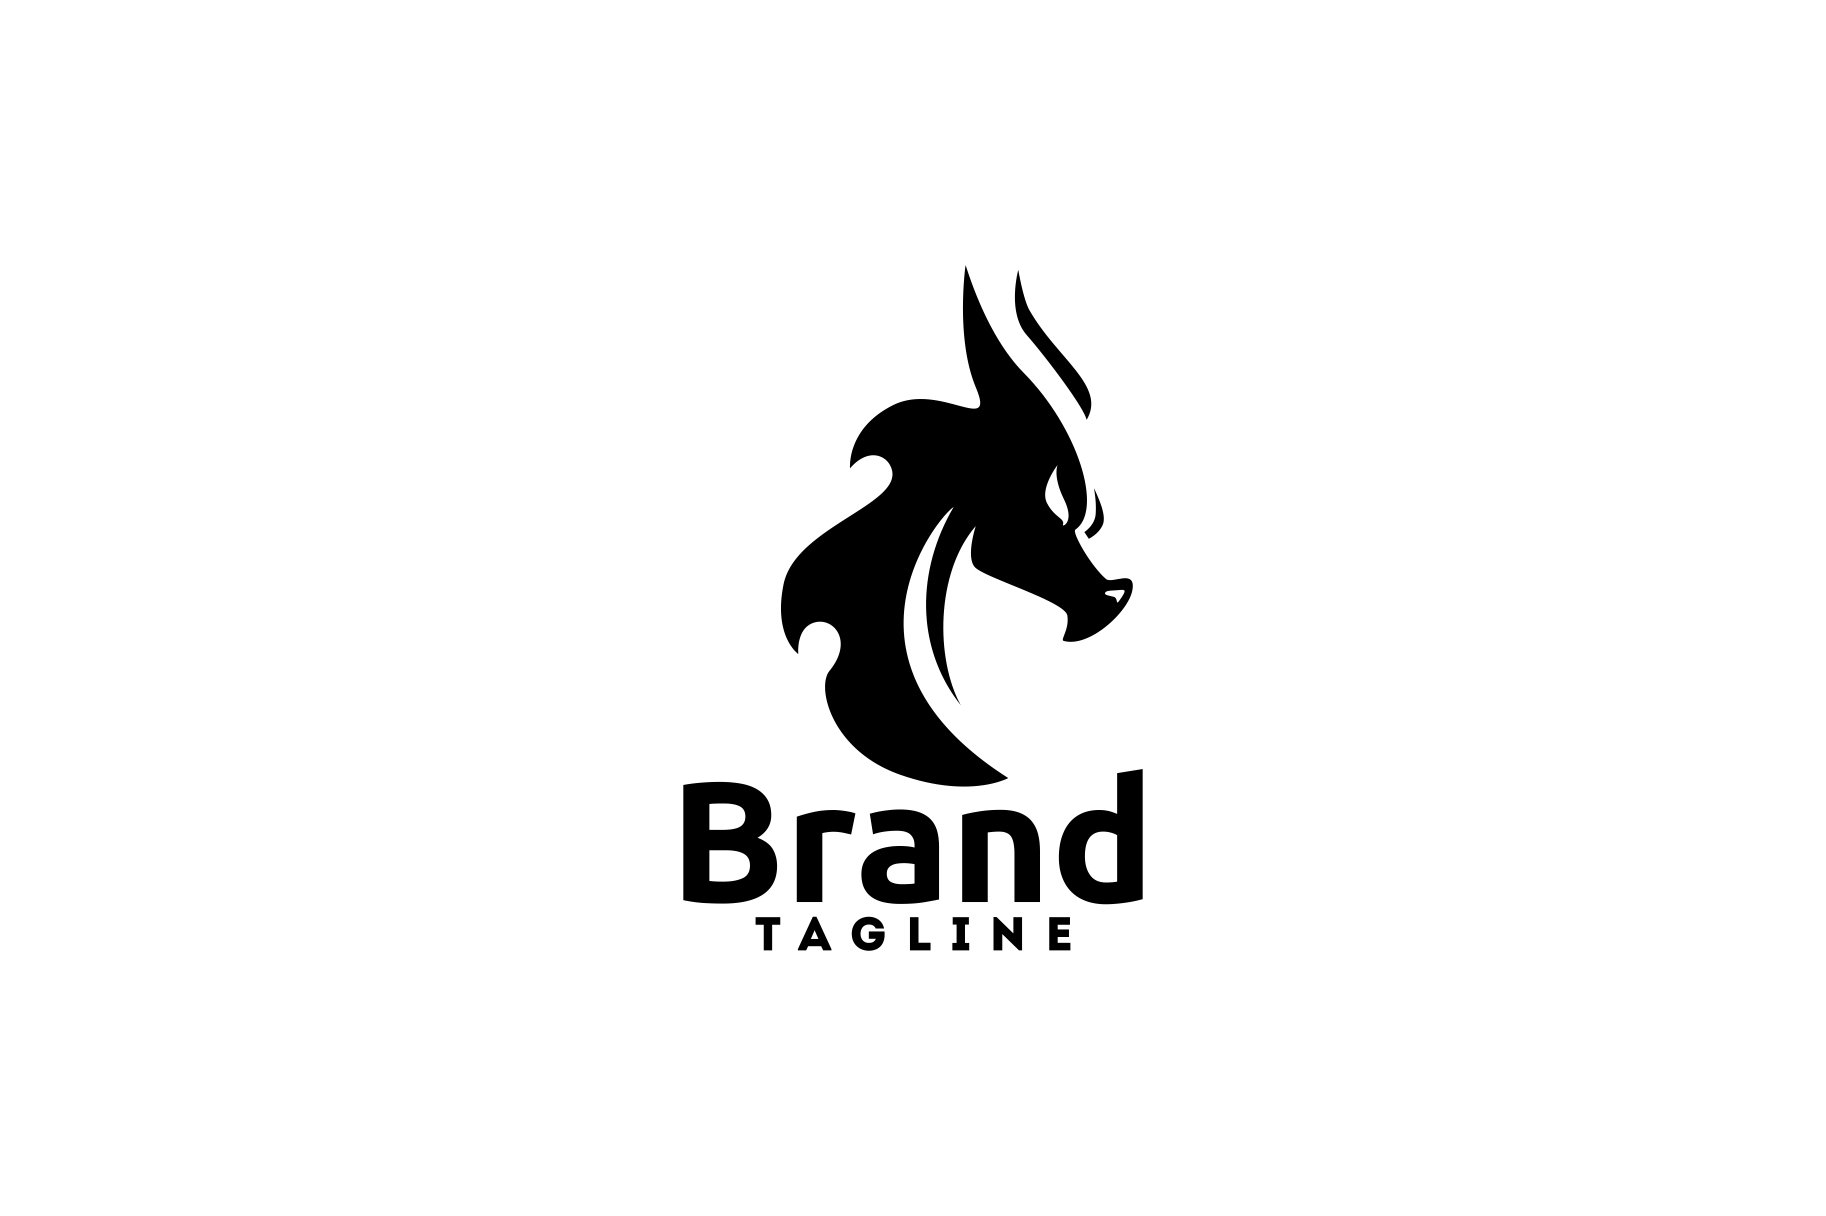 Dragon Logo Template cover image.